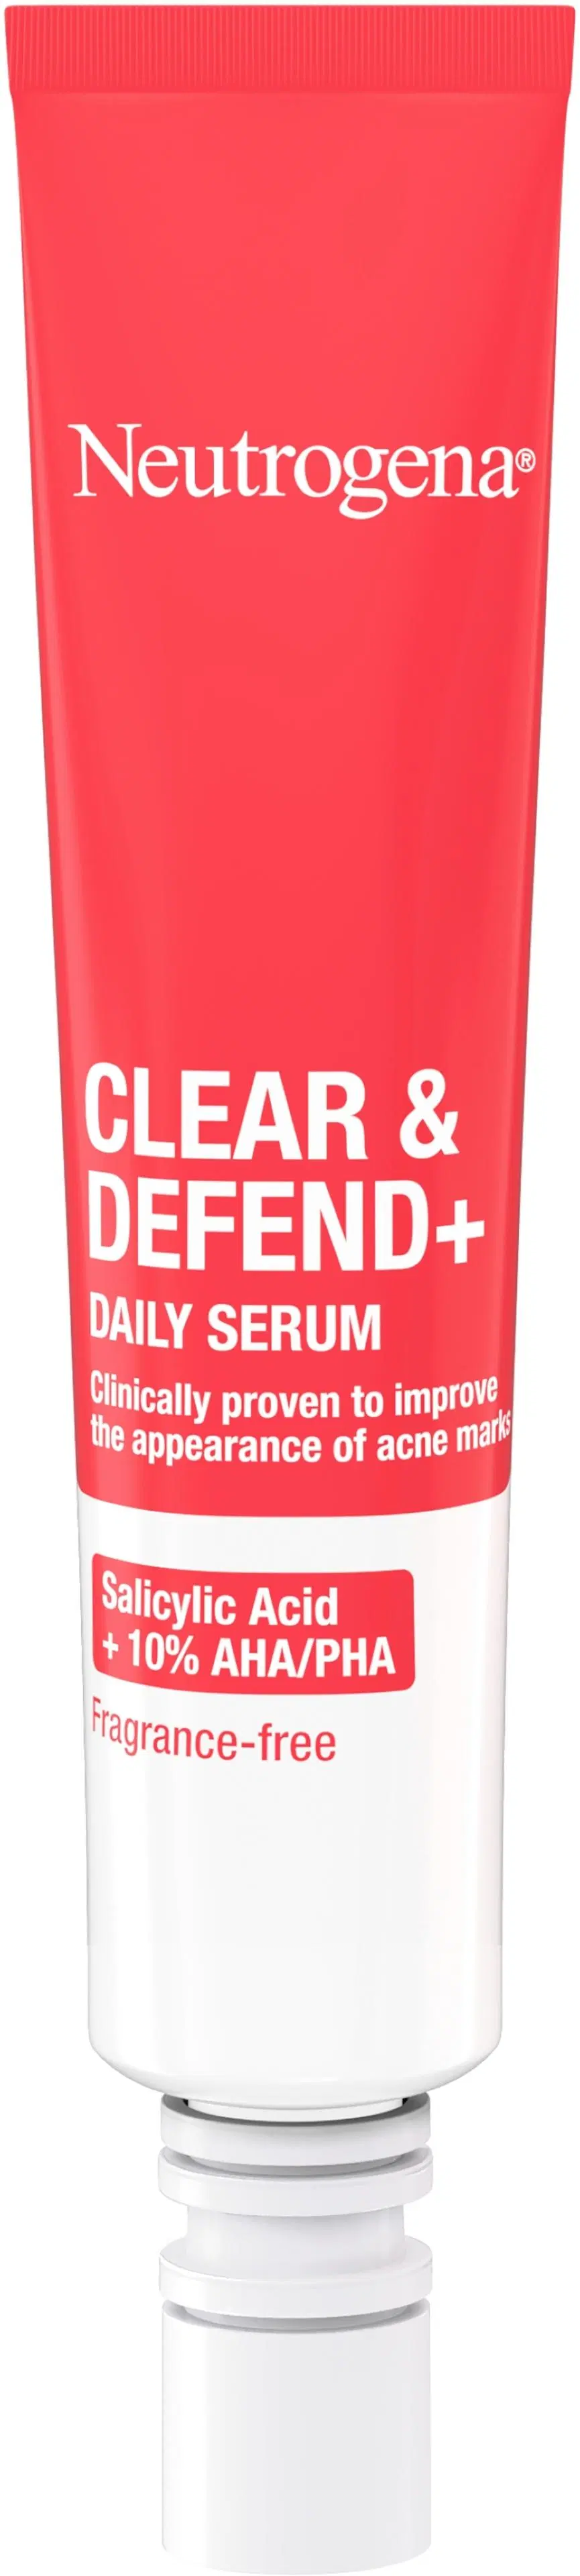 Neutrogena Clear & Defend+ Daily Serum kasvoseerumi 30 ml